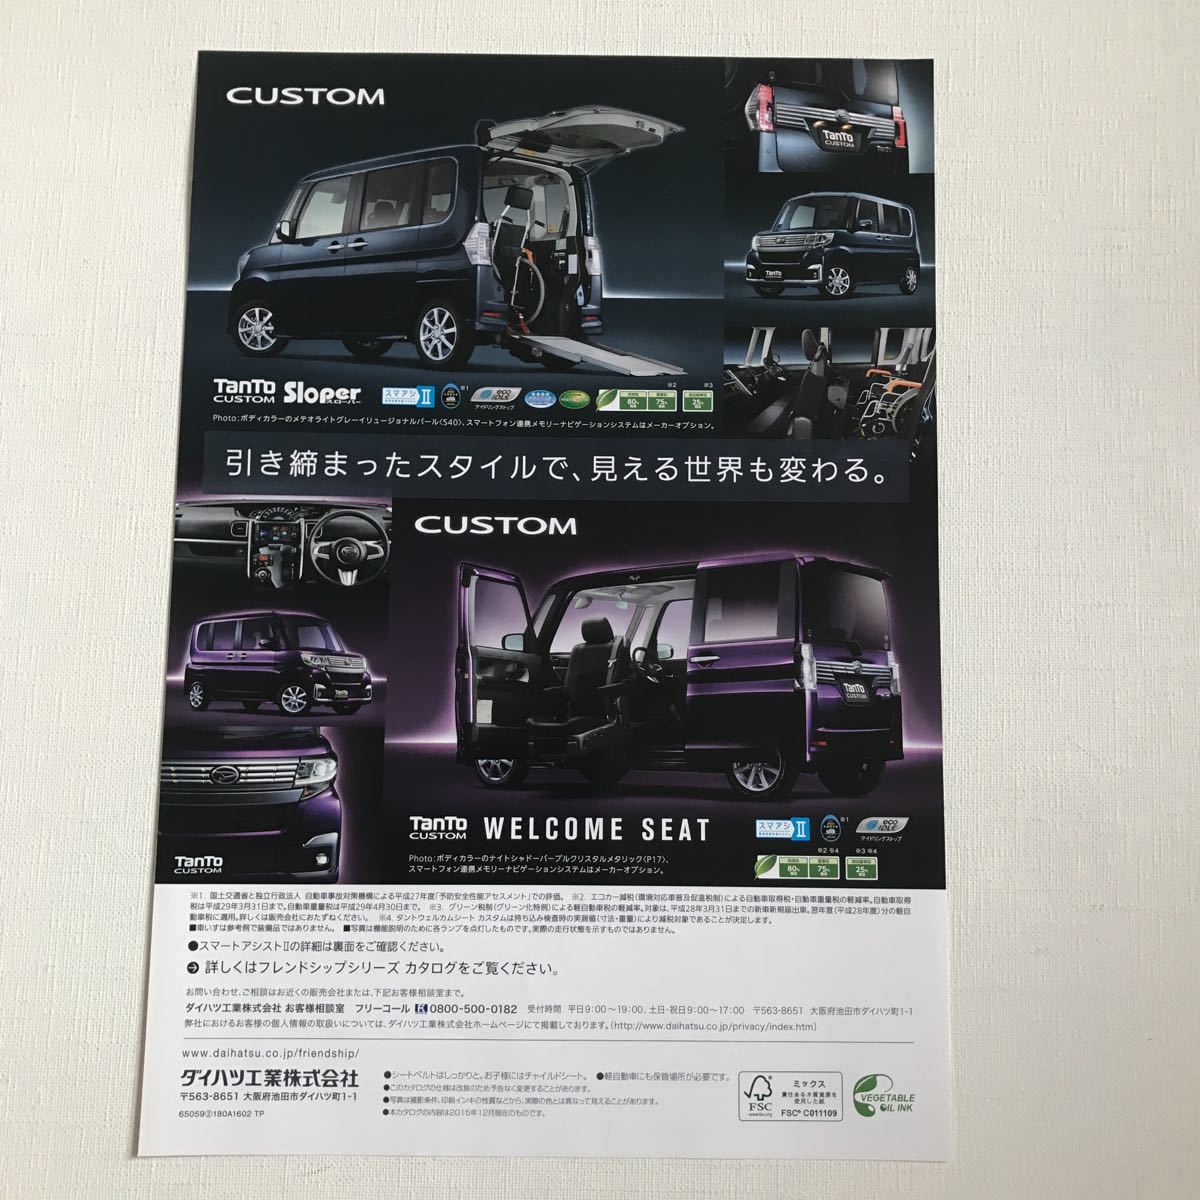  Daihatsu Tanto Custom catalog 